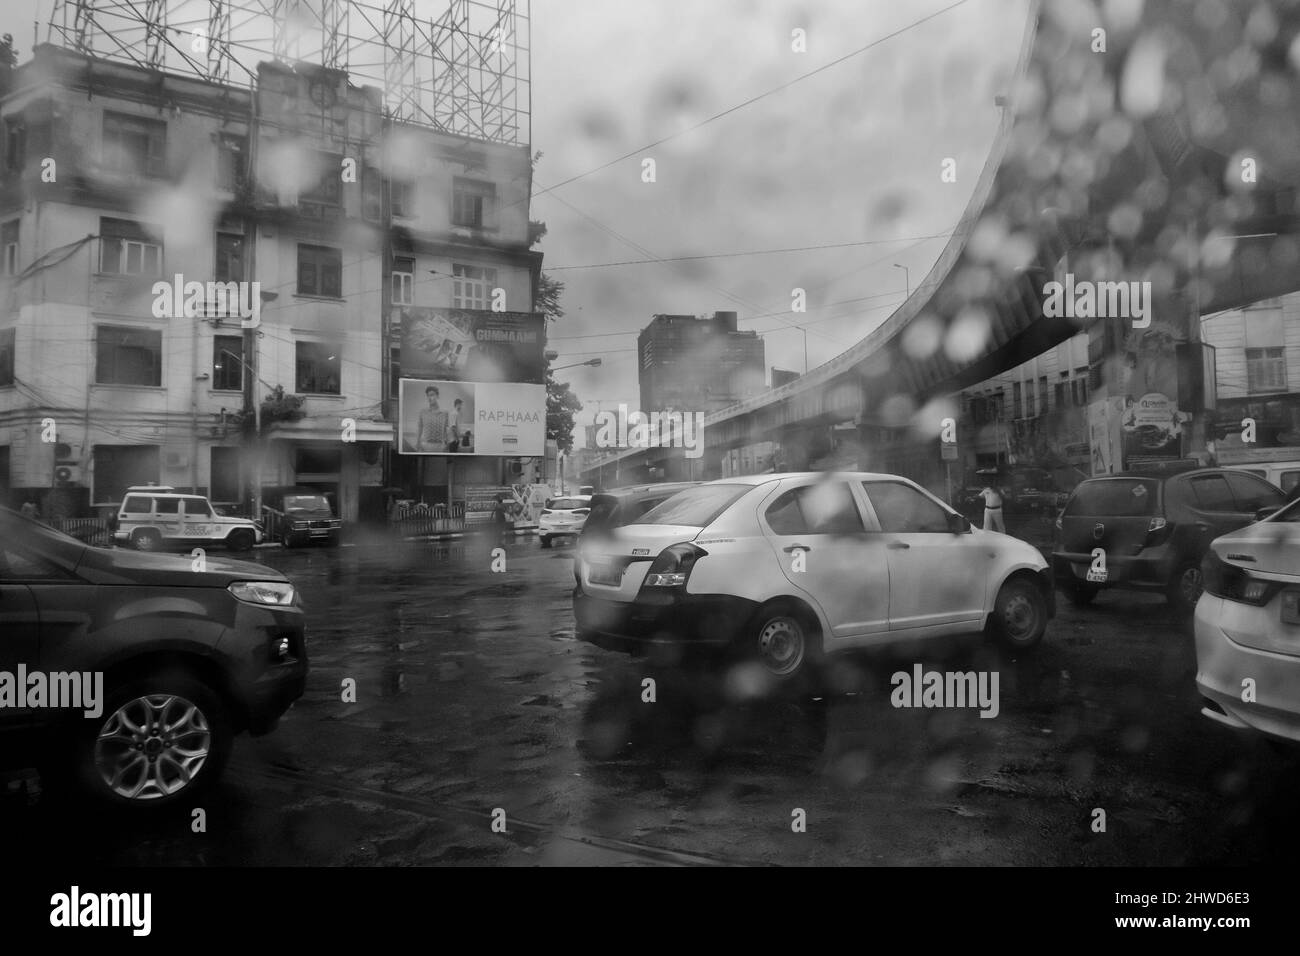 Kolkata, West Bengal, India - 25th September 2019 : Image shot through raindrops falling on wet glass, abstract blurs of traffic - monsoon stock image Stock Photo